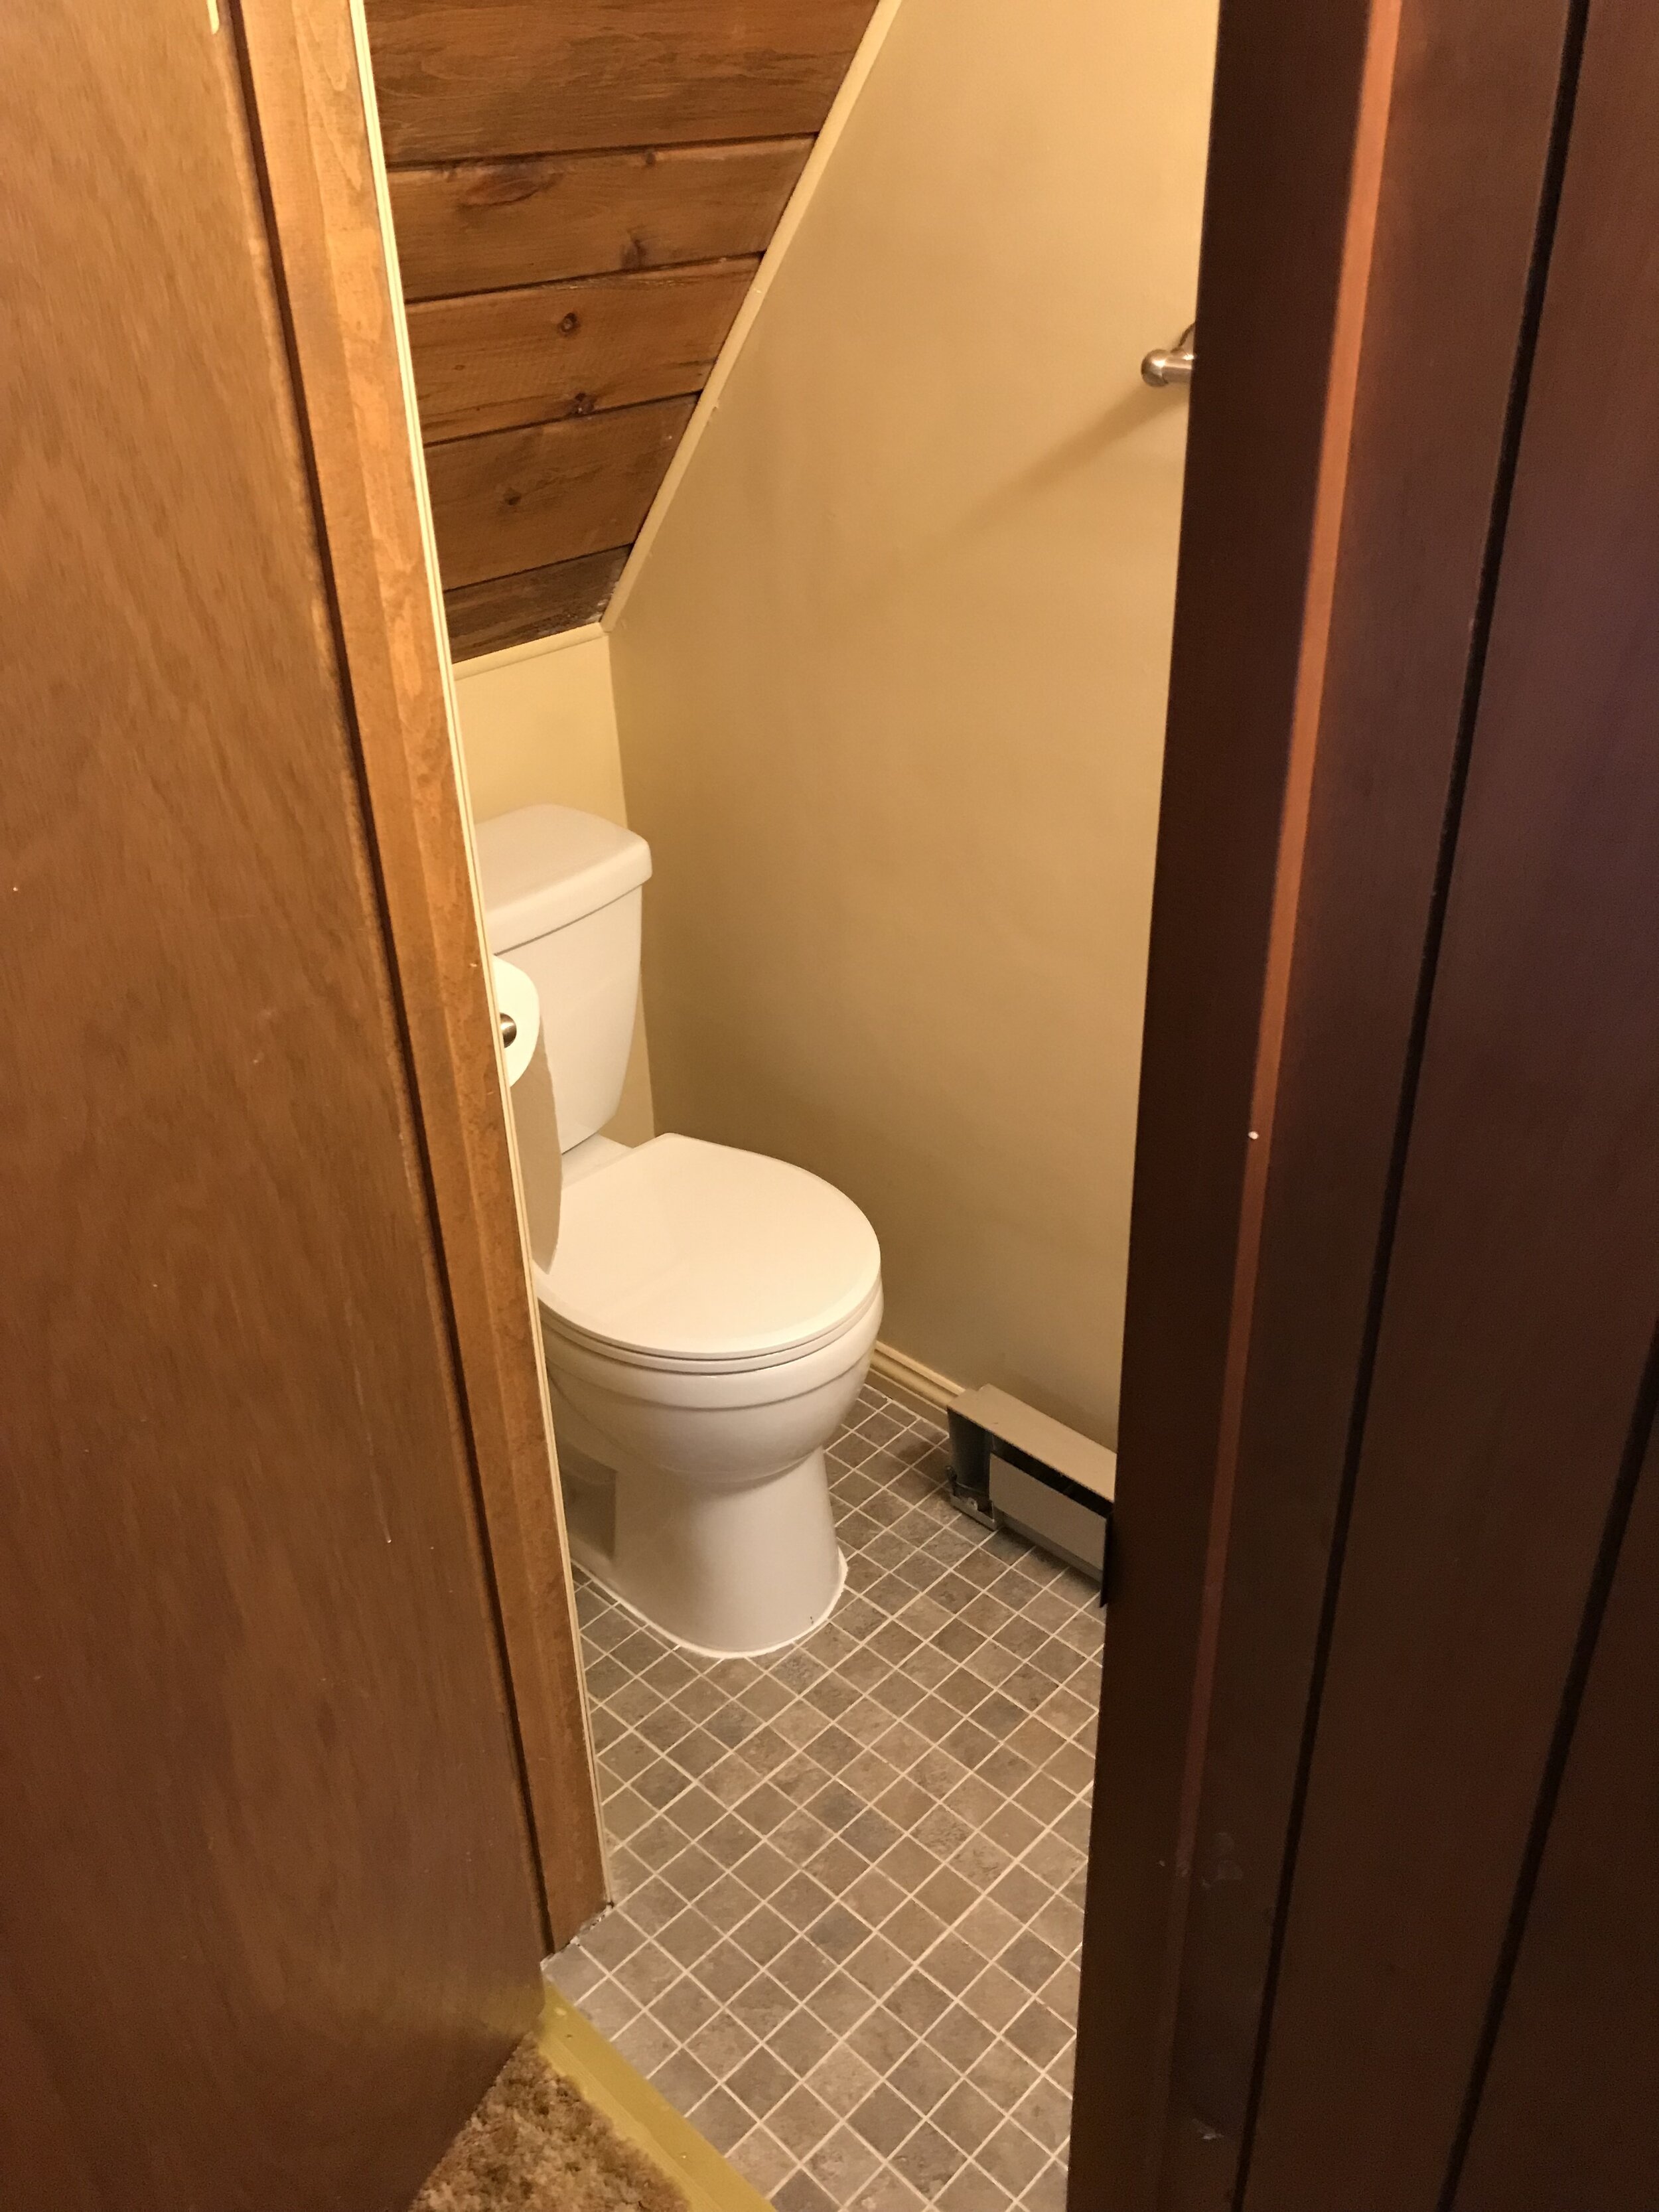 Bathroom Remodel - (after) Notice new tile flooring